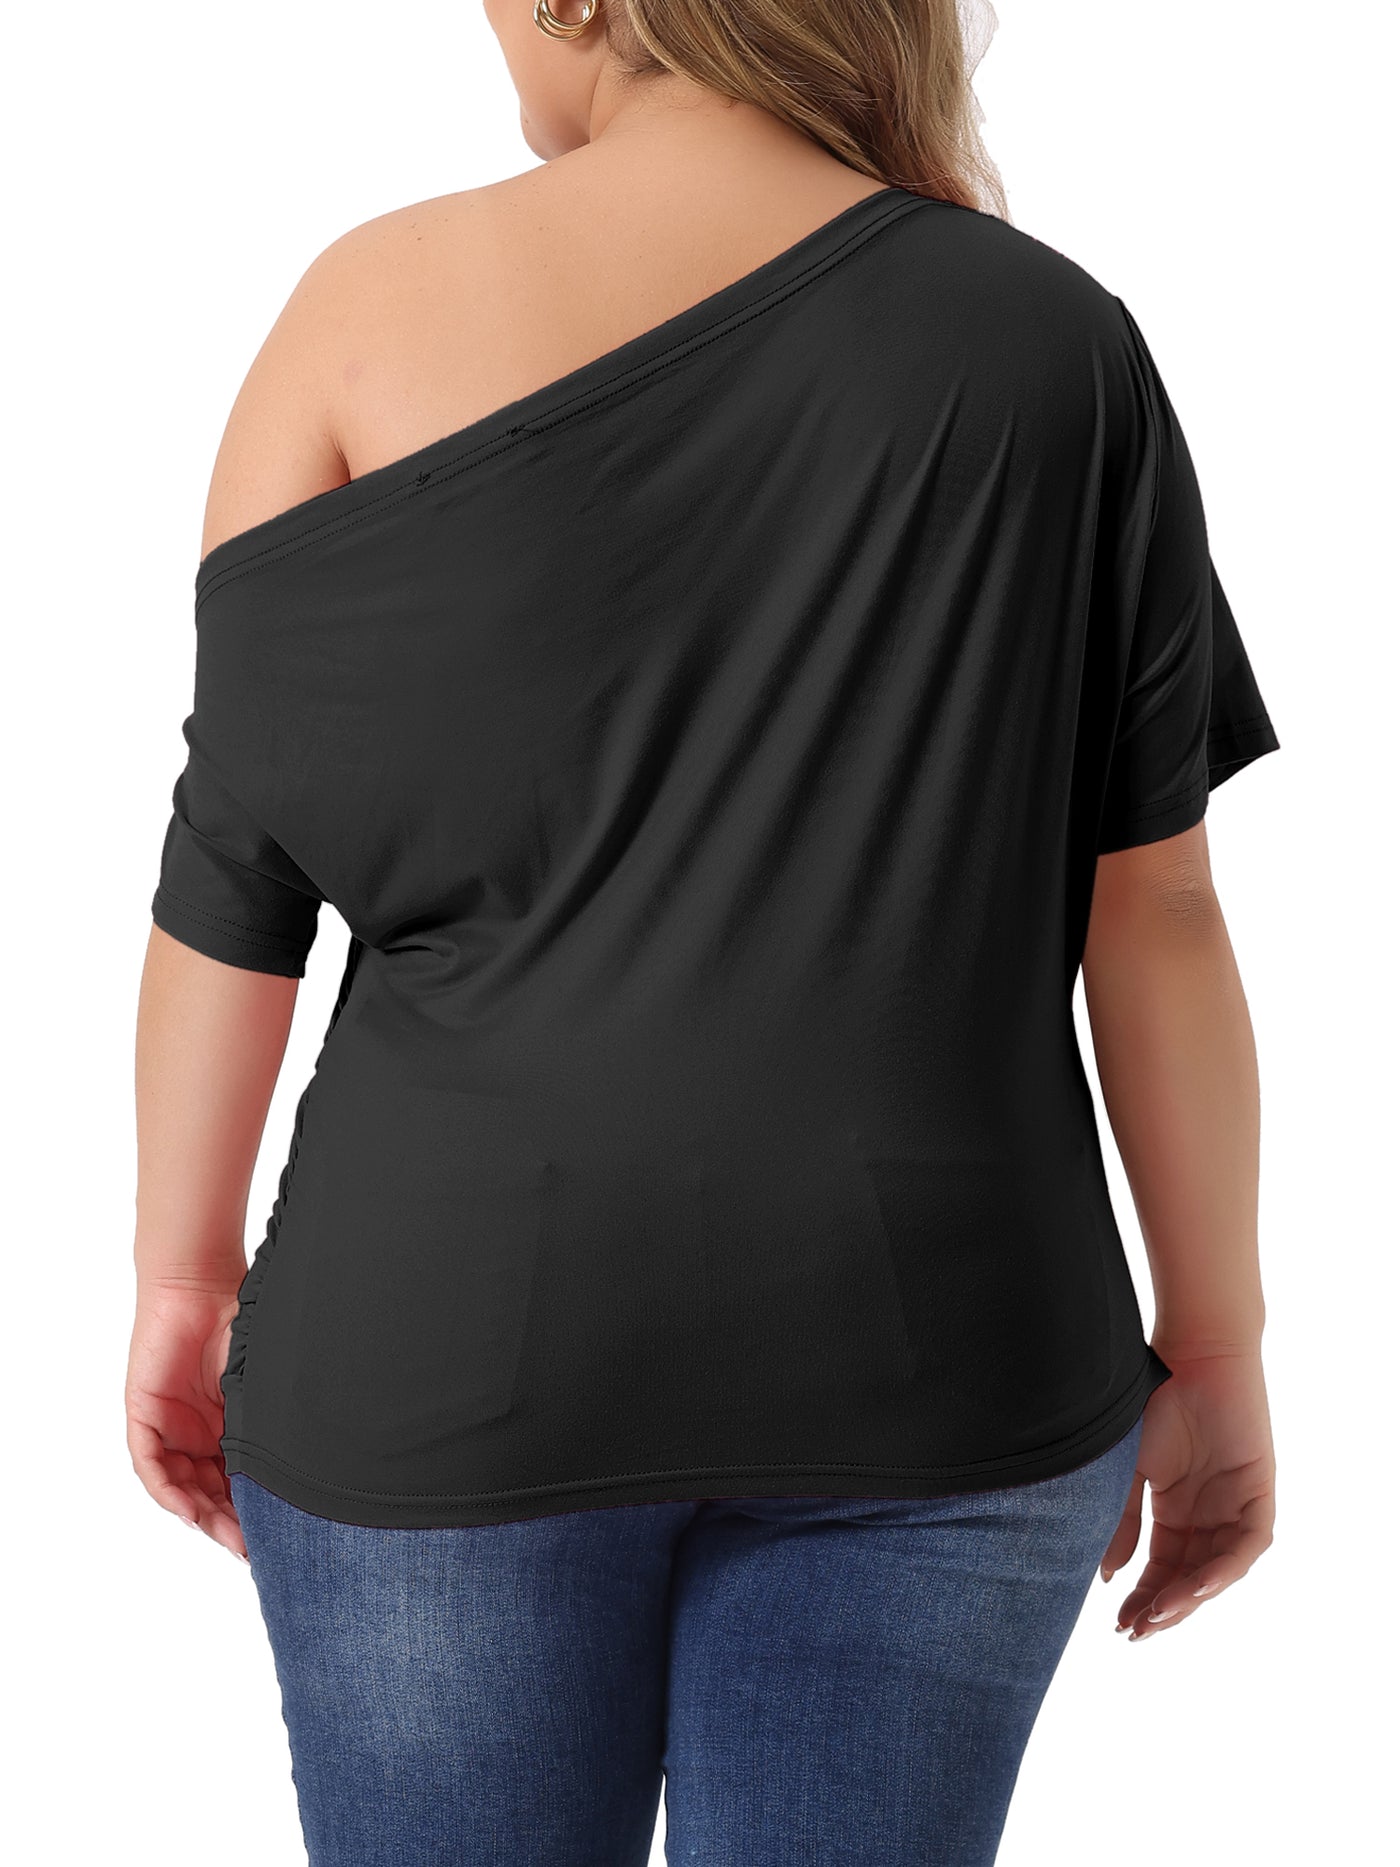 Bublédon Plus Size Tops for Women One Shoulder Short Sleeve Ruched Basic Blouses